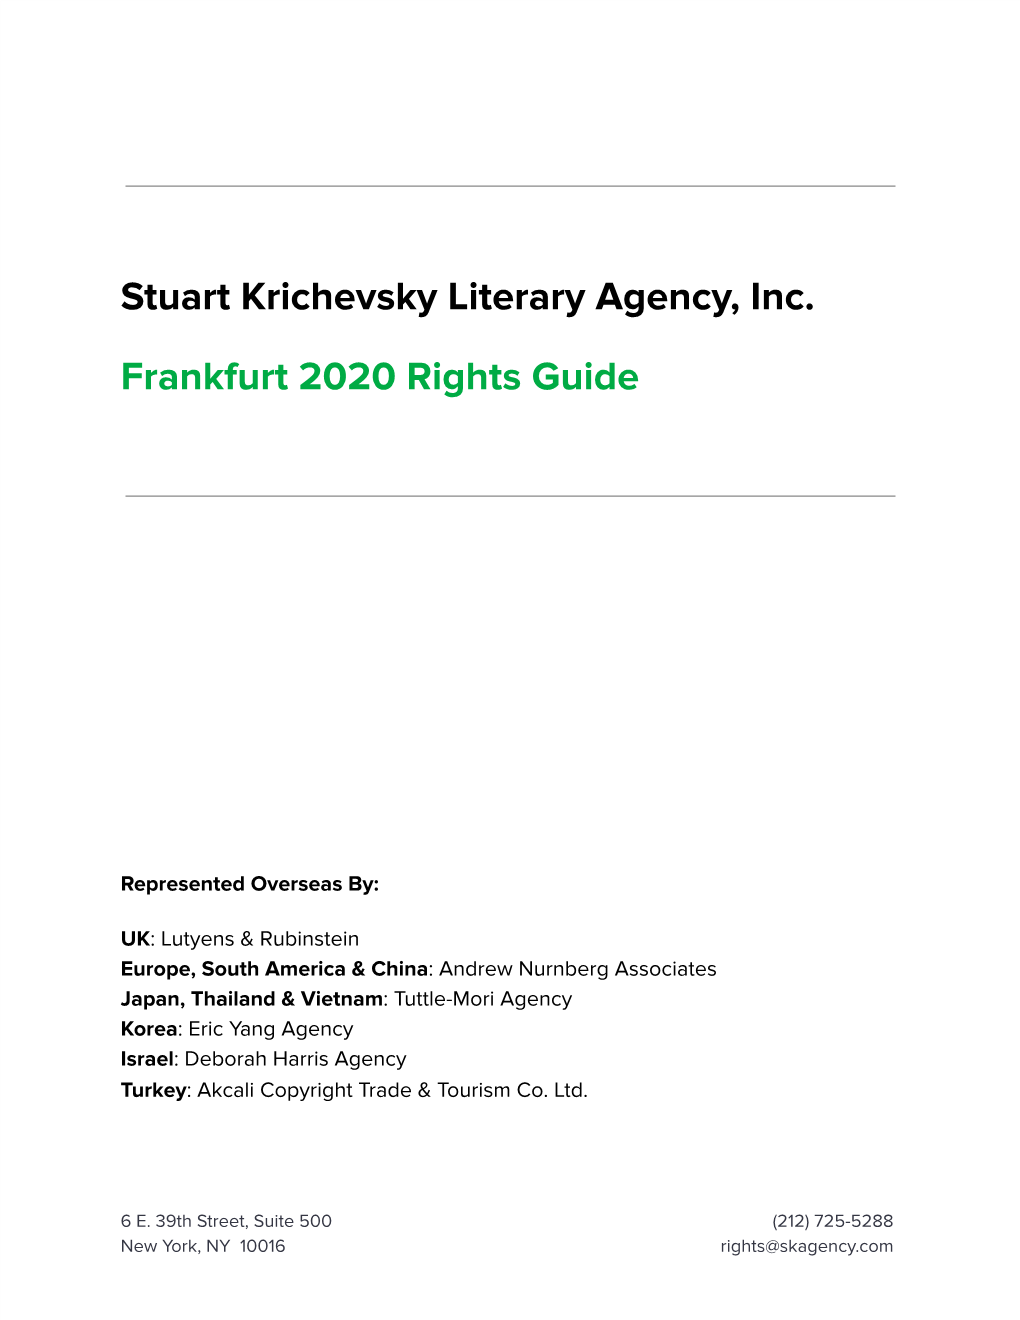 Stuart Krichevsky Literary Agency, Inc. Frankfurt 2020 Rights Guide